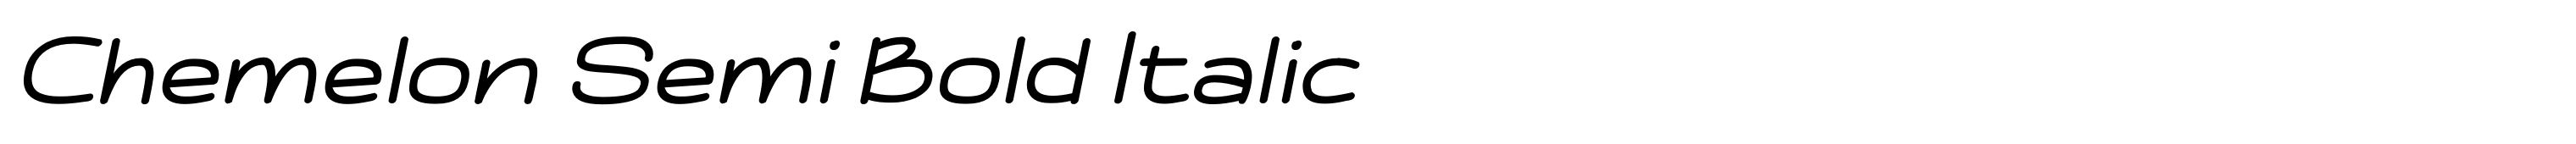 Chemelon Semi Bold Italic